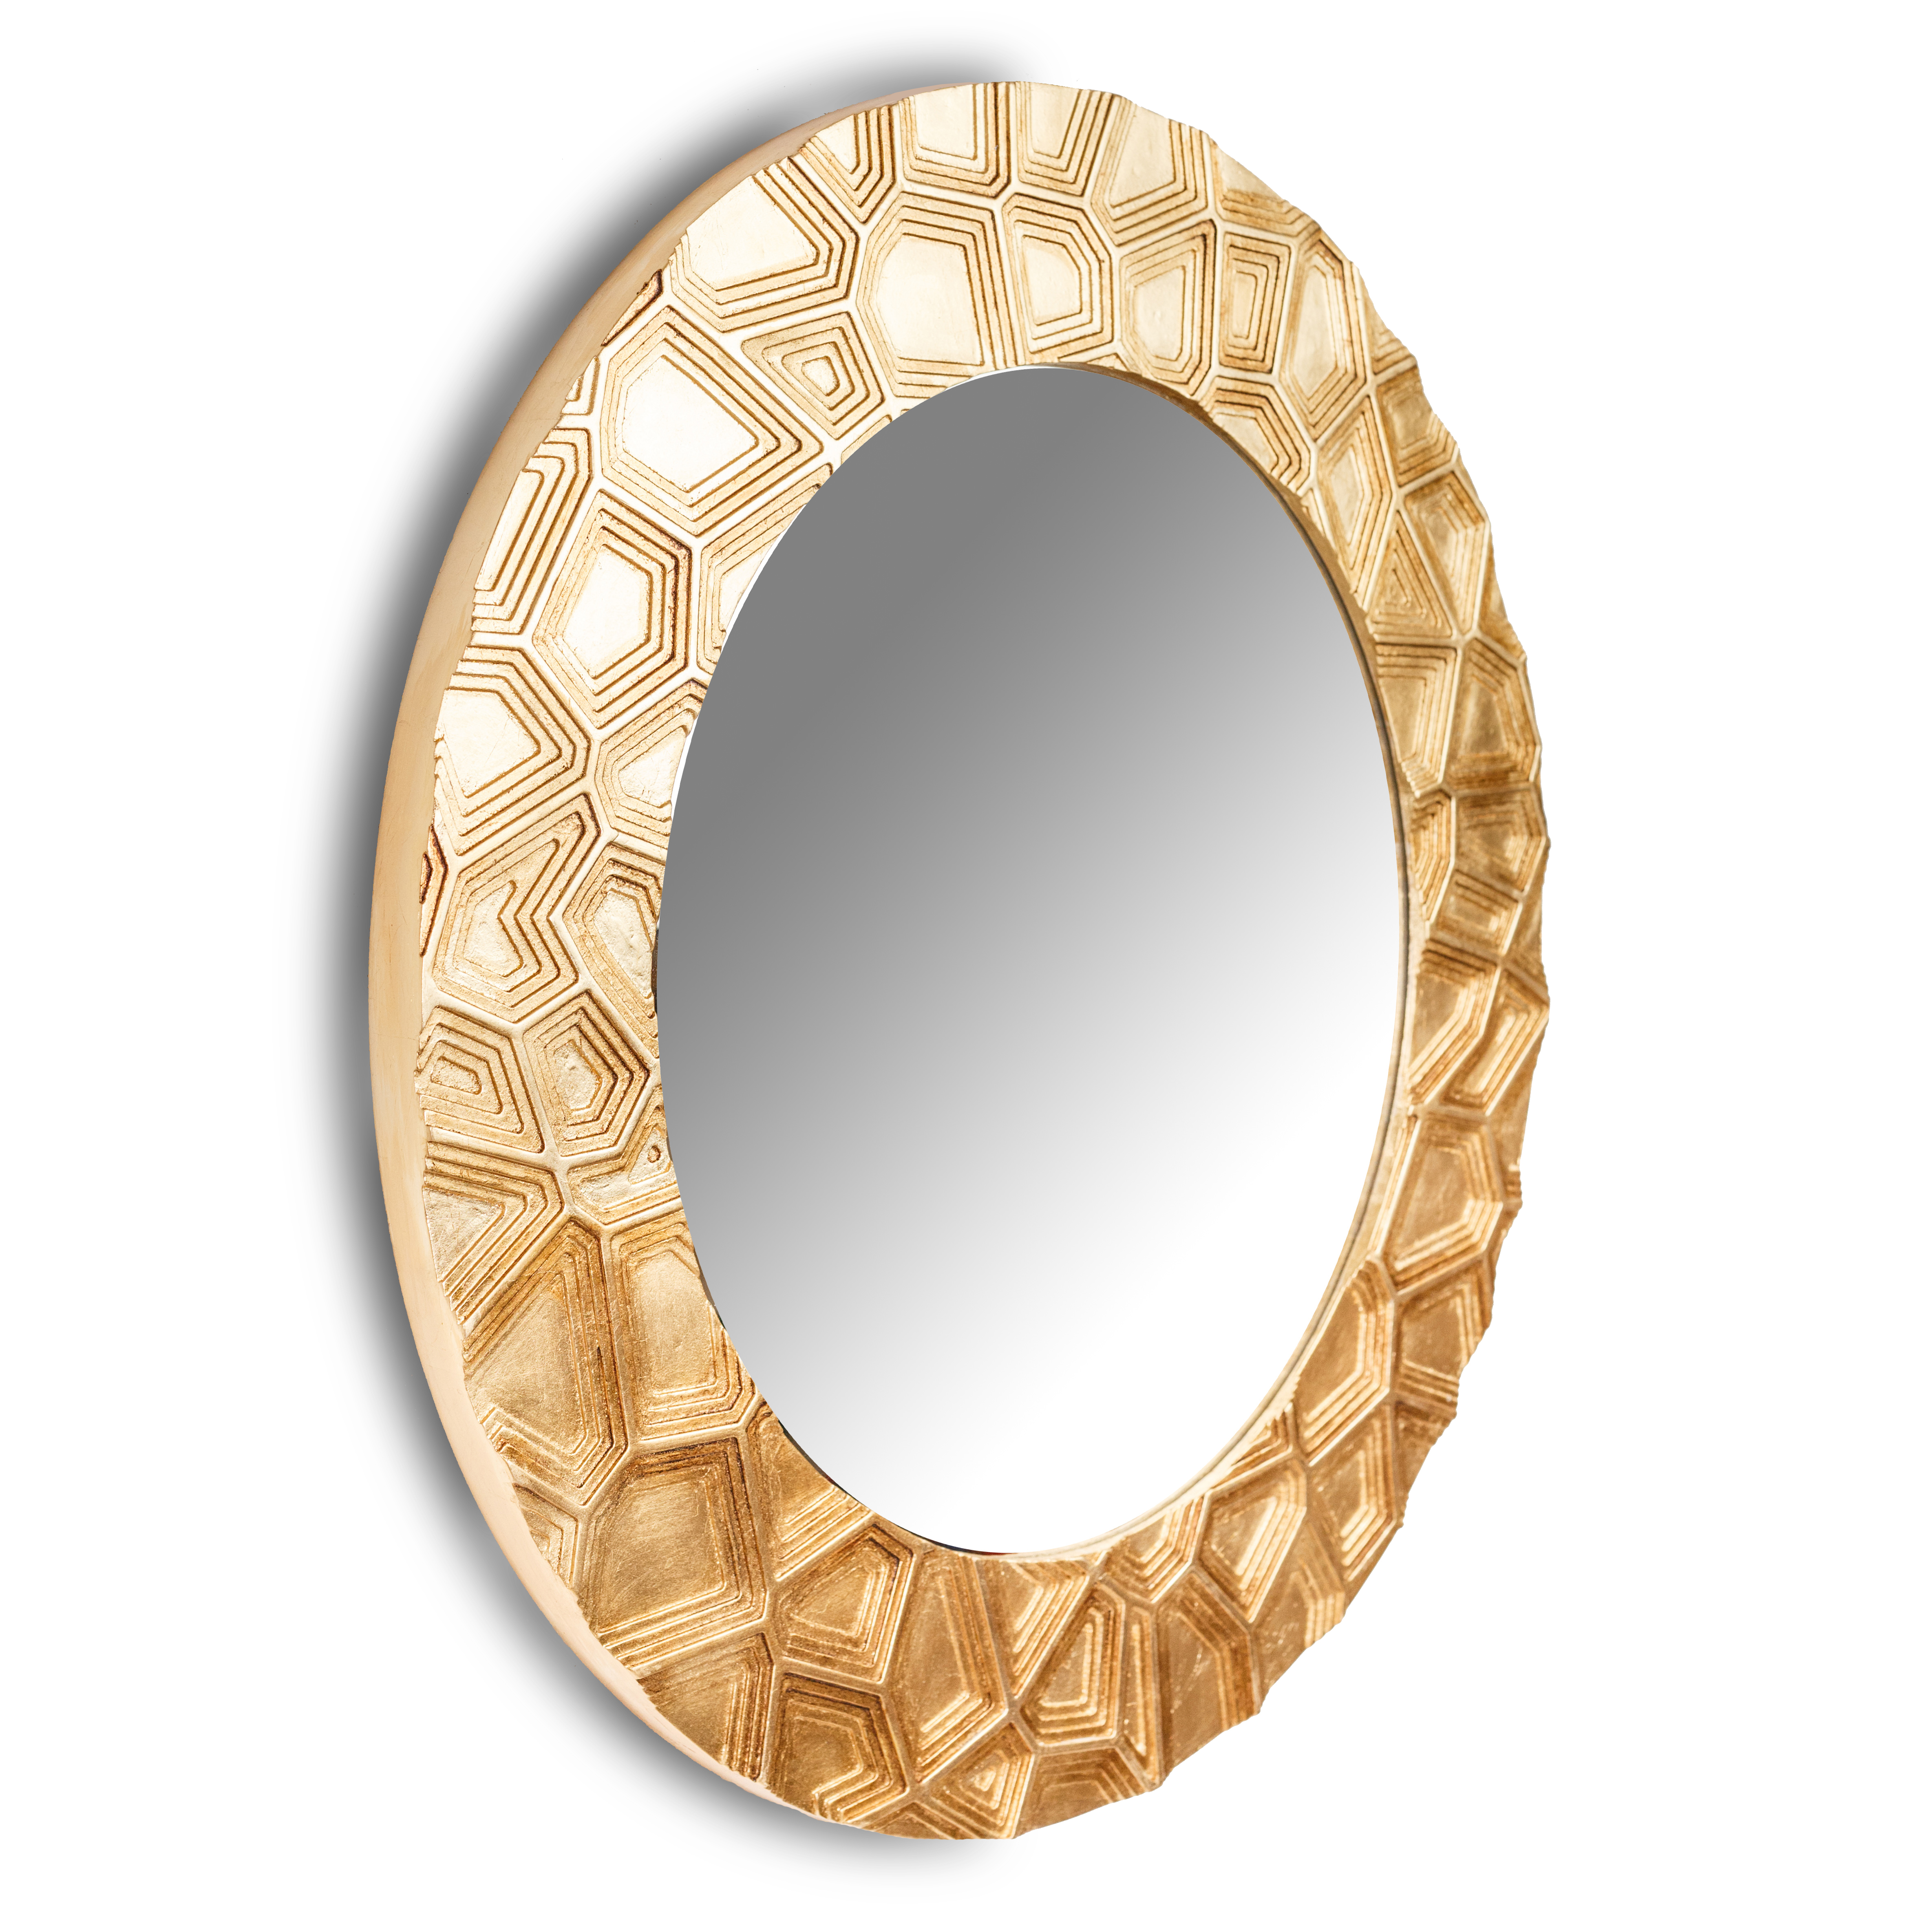 Зеркало gold. Зеркало круглое настенное. Зеркало настенное золото. Зеркало золотое круглое. Зеркало настенное круглое золотое.